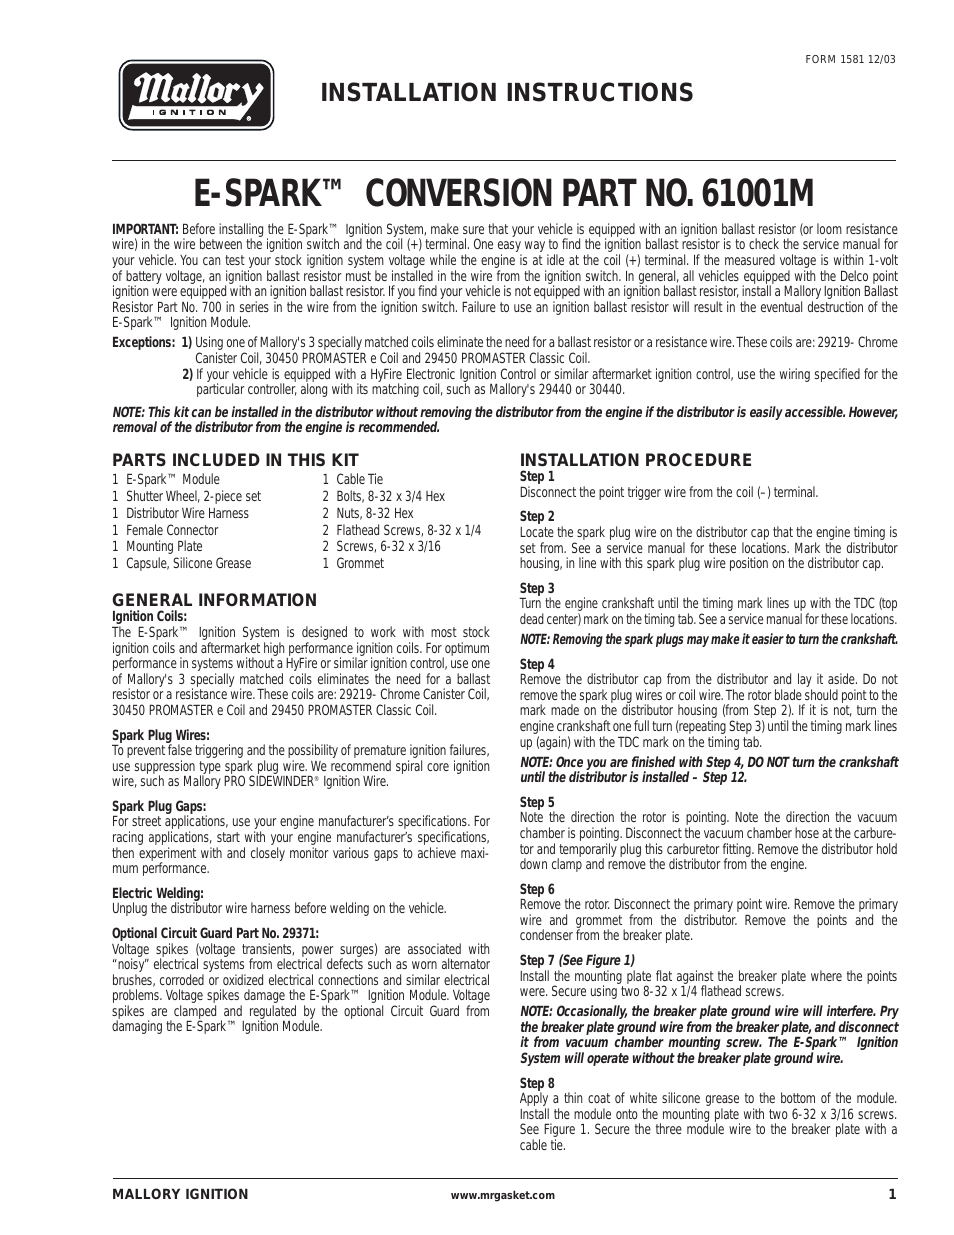 Mallory E-SPARK CONVERSION PART 61001M